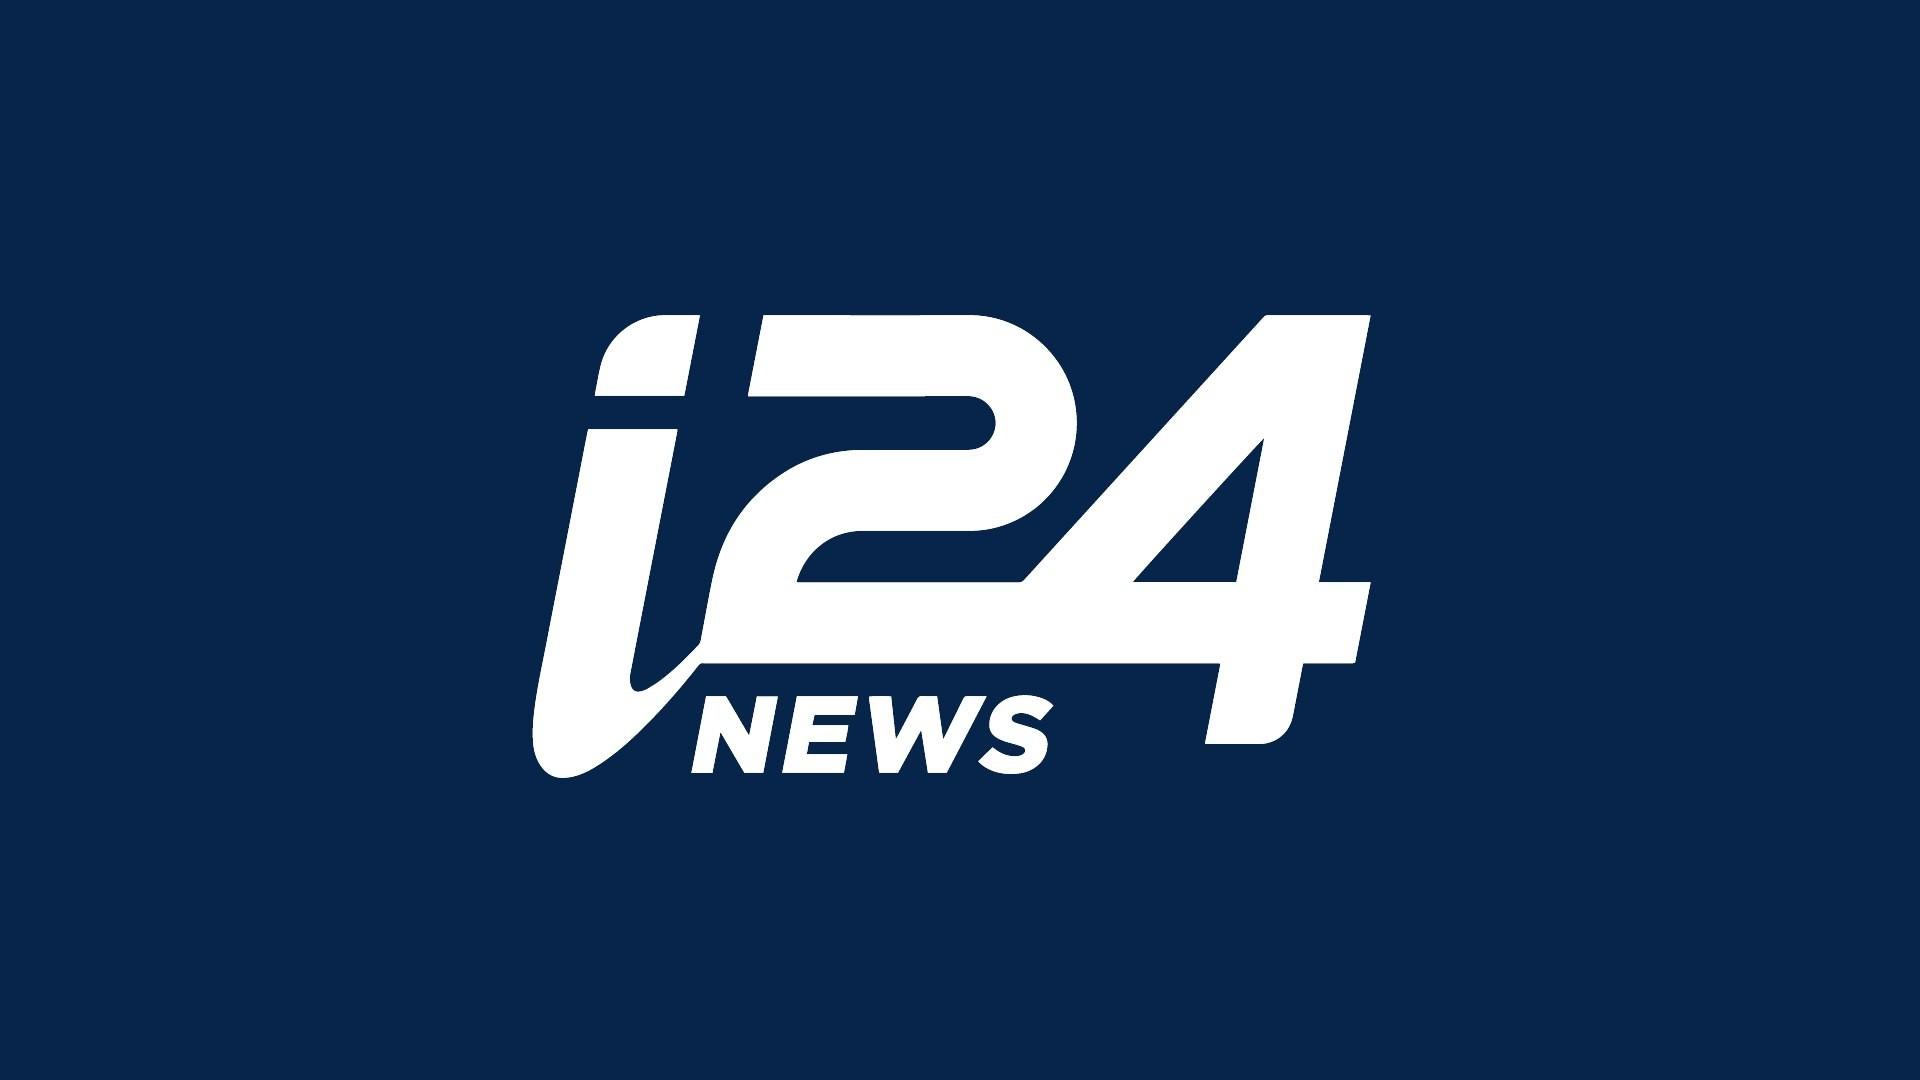 i24 ערוץ החדשות הבינלאומי ערוץ חדשות